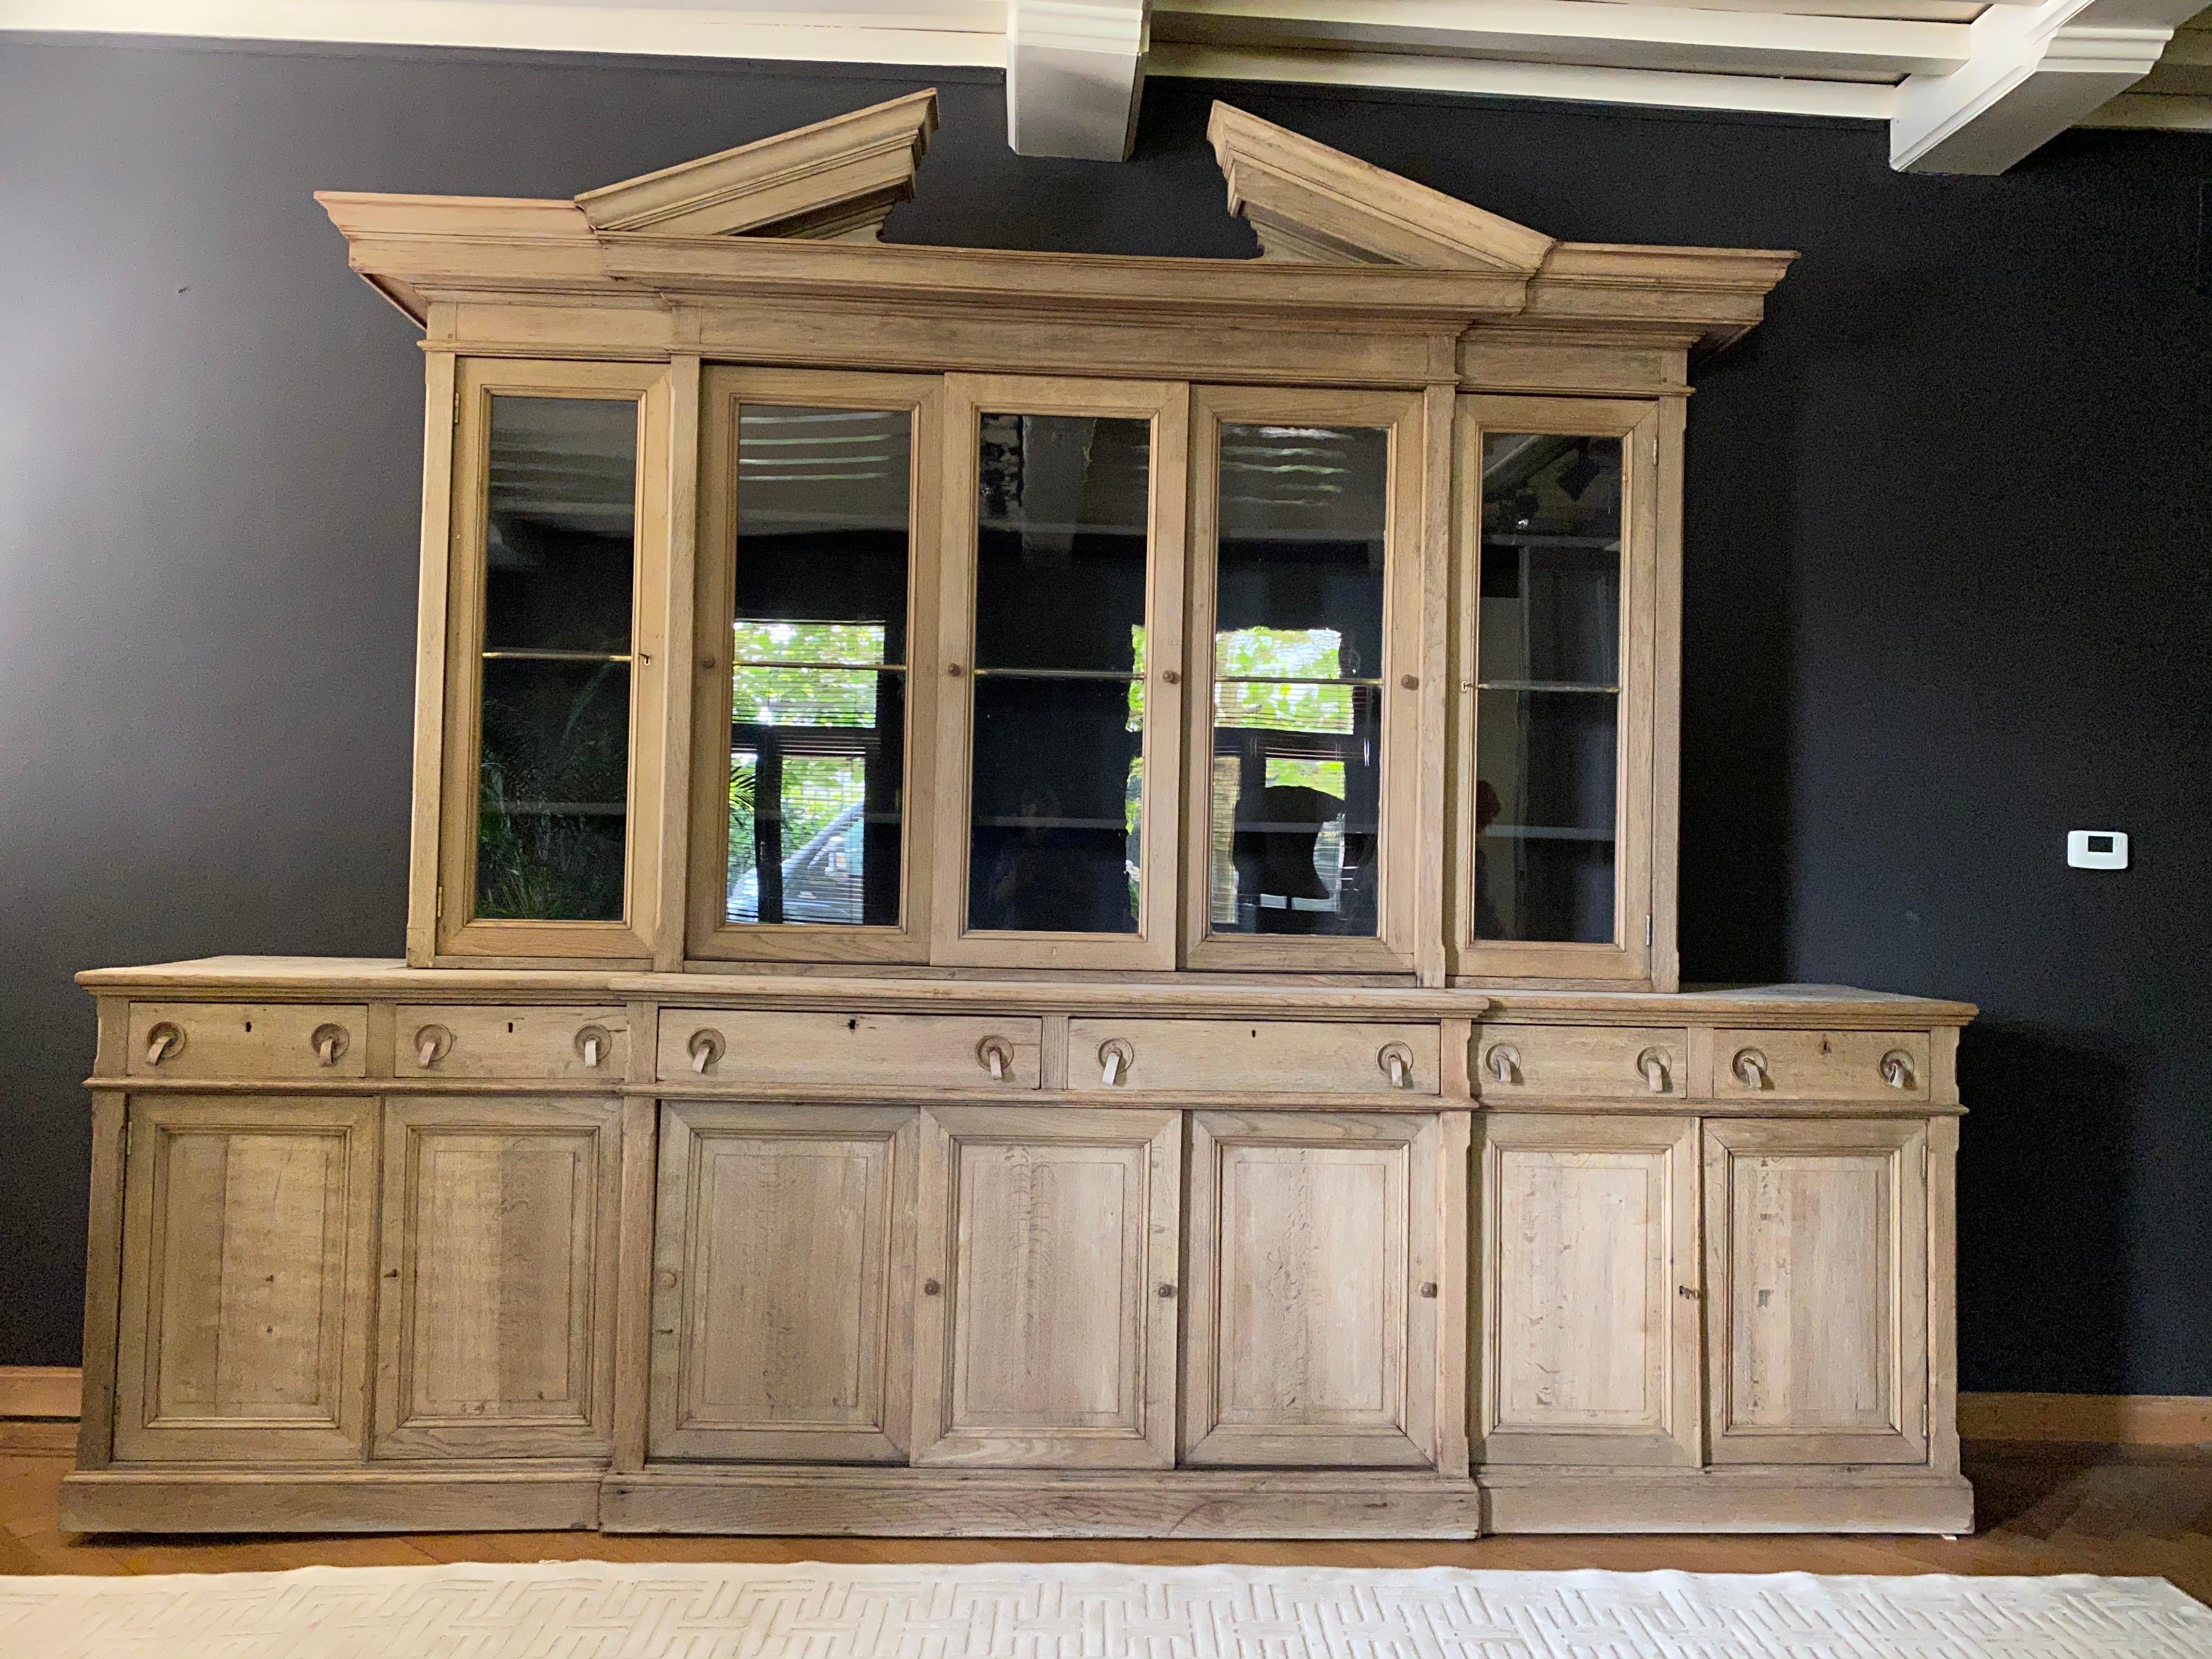 bleached oak cabinets